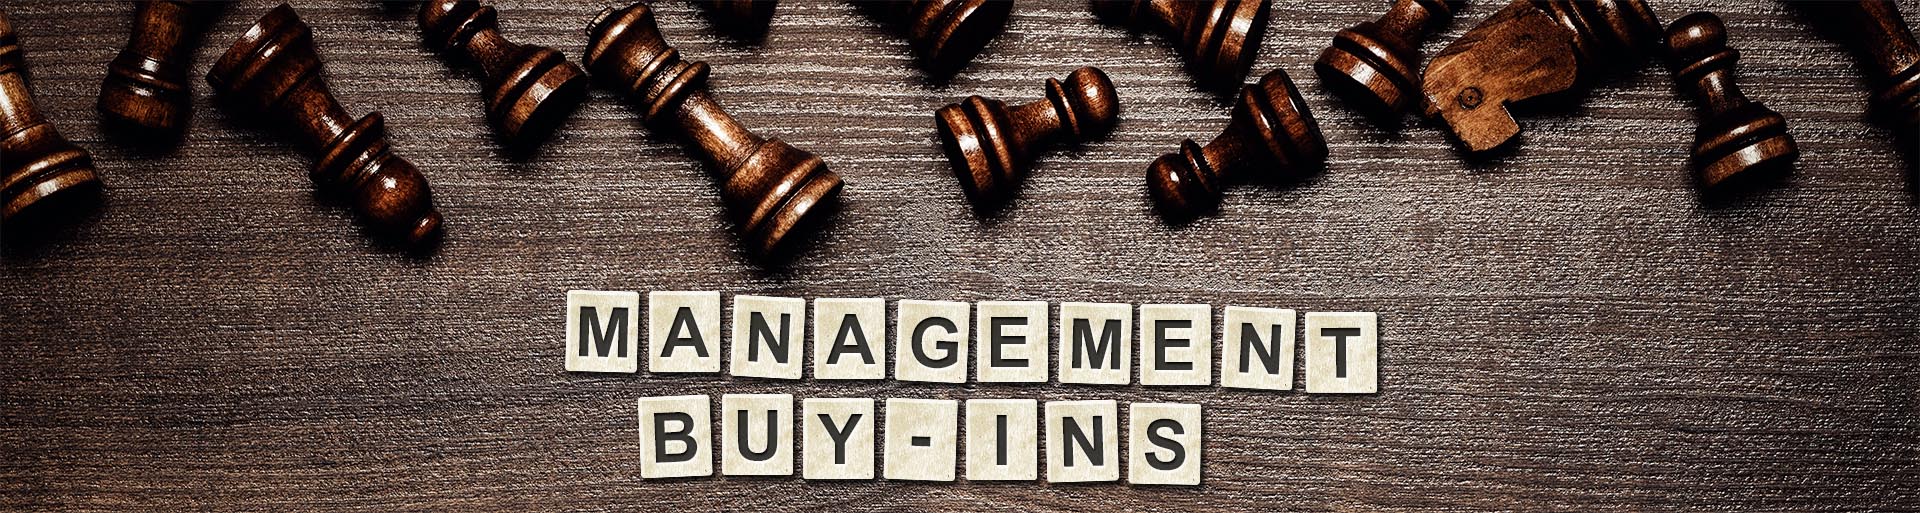 Management Buy-Ins